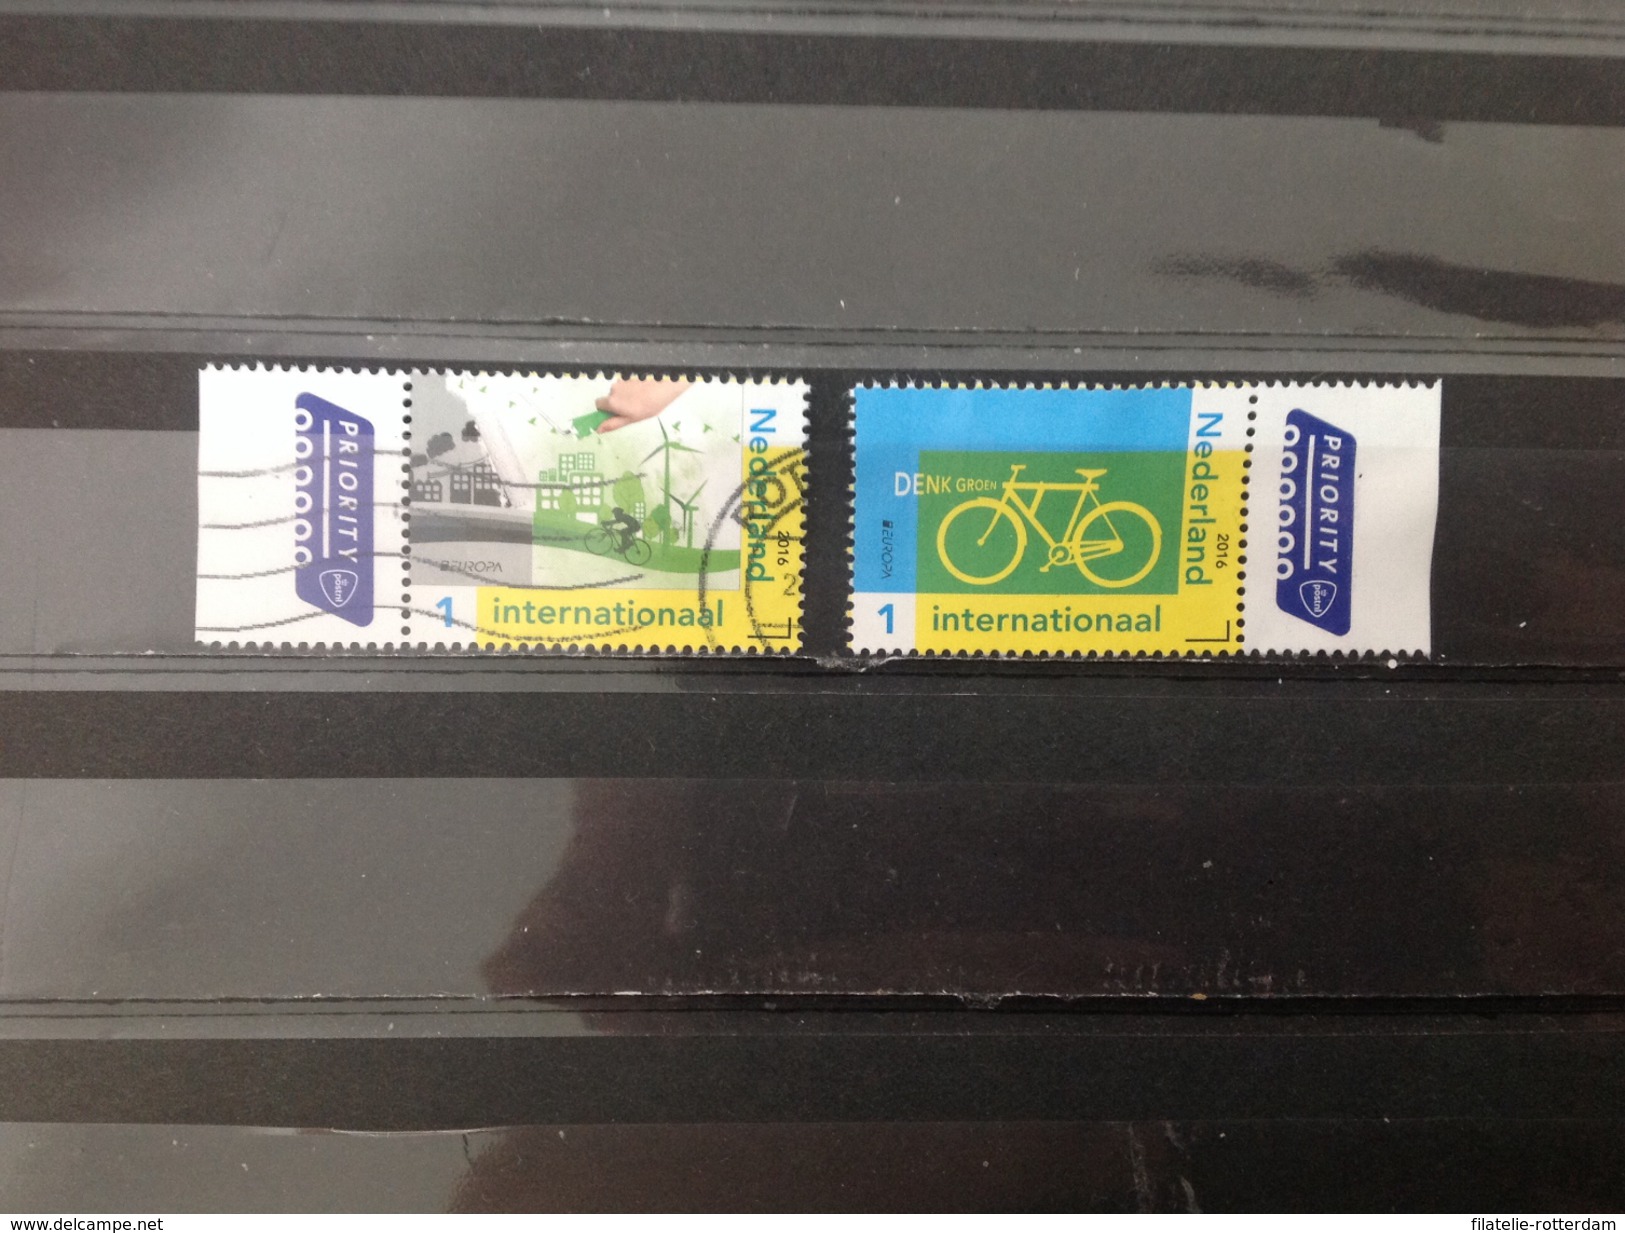 Nederland / The Netherlands - Complete Serie Europa, Denk Groen 2016 - Used Stamps